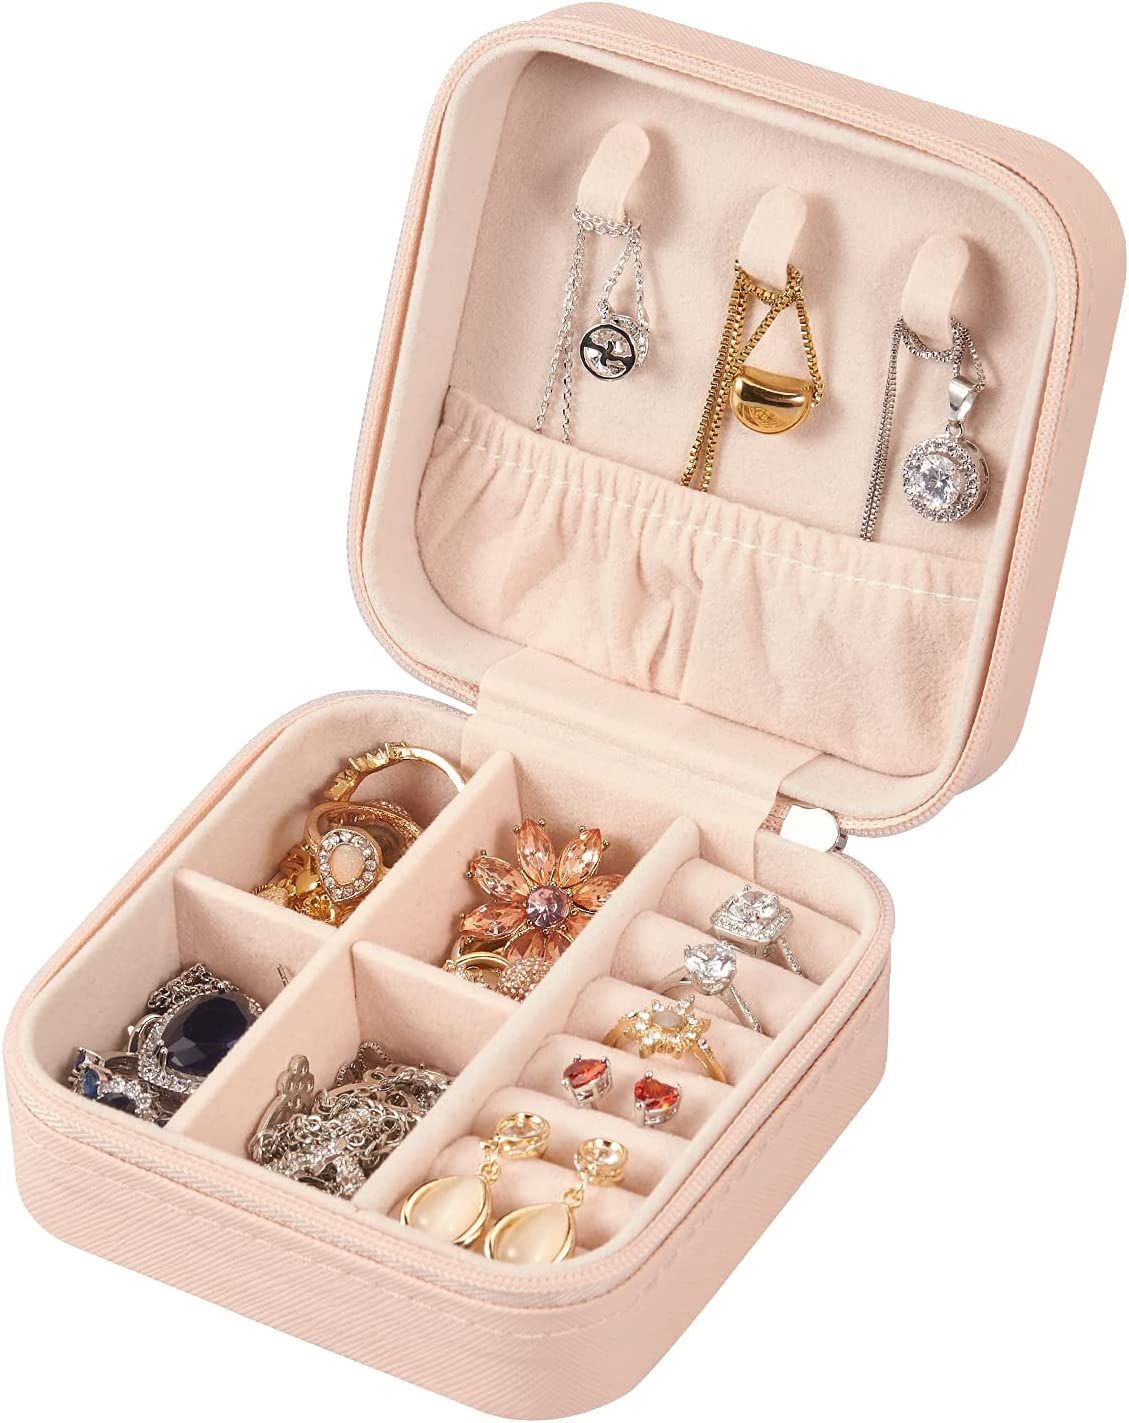 Mini Portable jewelry box, pu leather jewelry case, makeup organizer cosmetic storage, travel earrings rings casket box